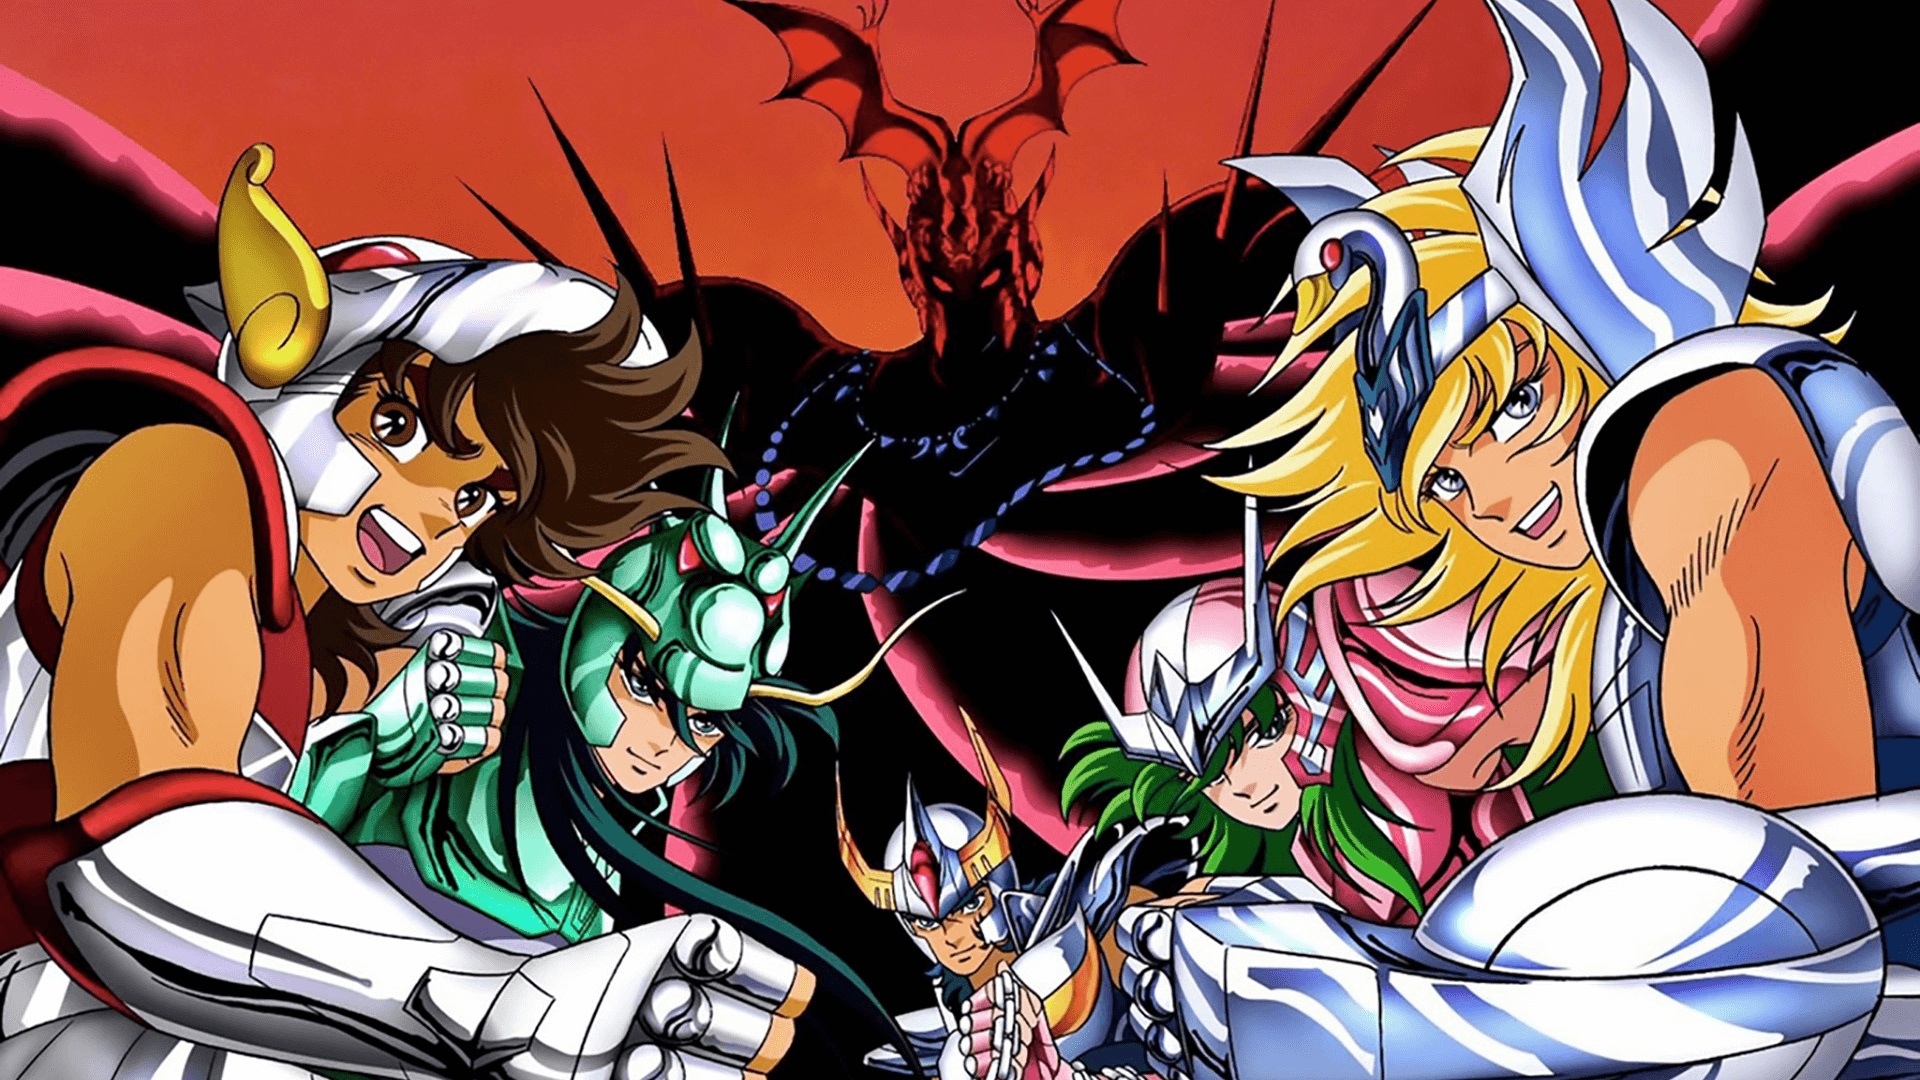 Anime Os Cavaleiros do Zodíaco está disponível na Netflix